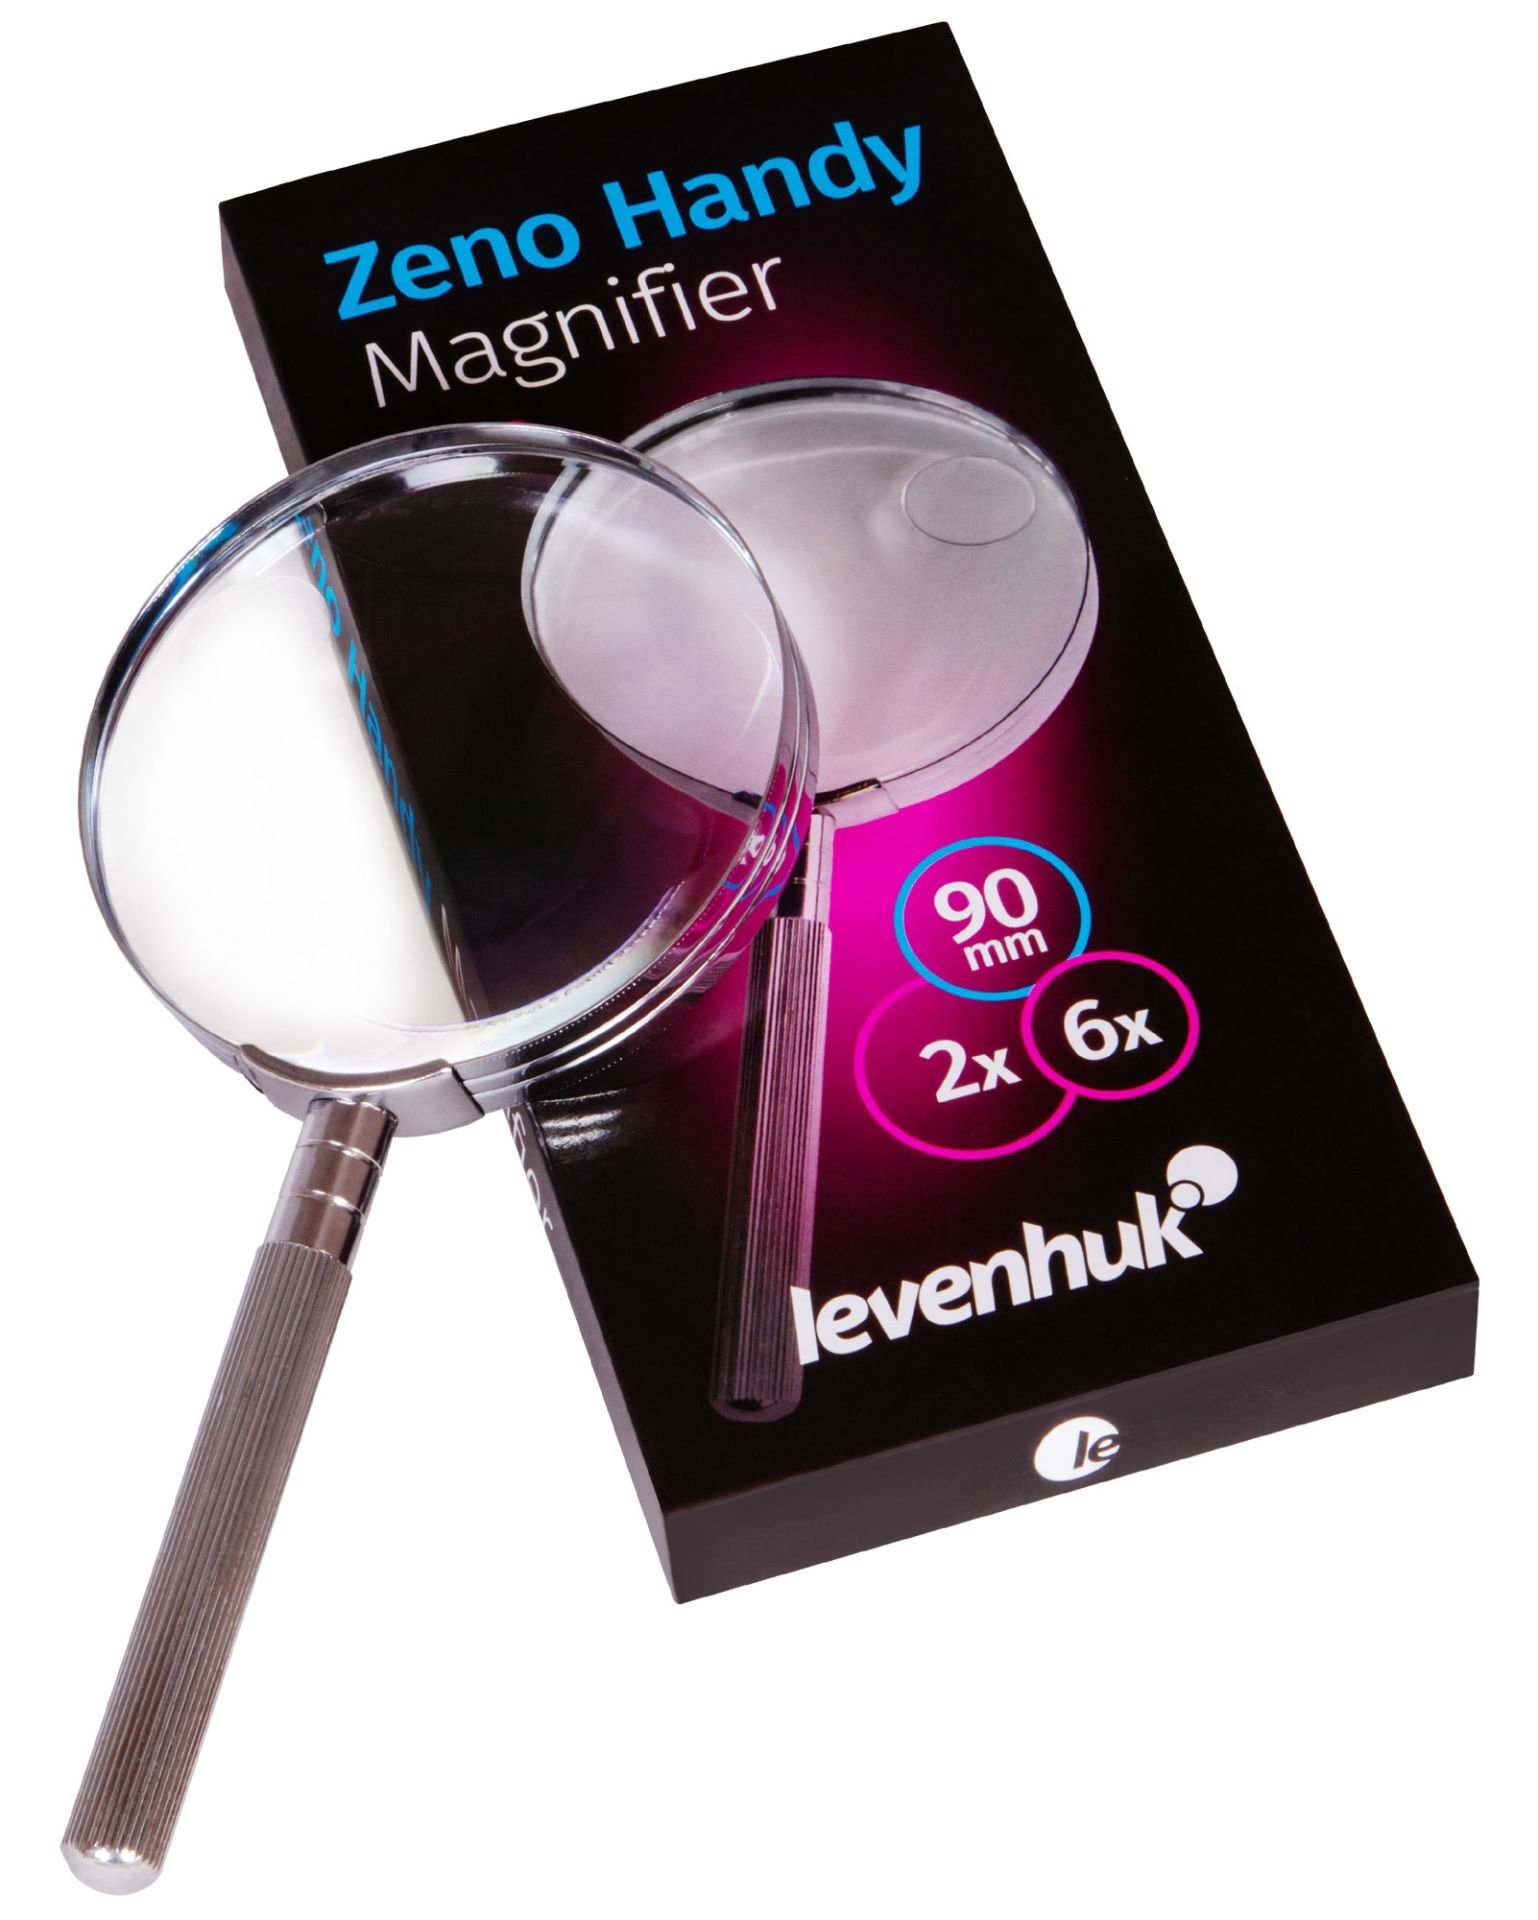 Levenhuk Zeno Handy ZH25 Büyüteç